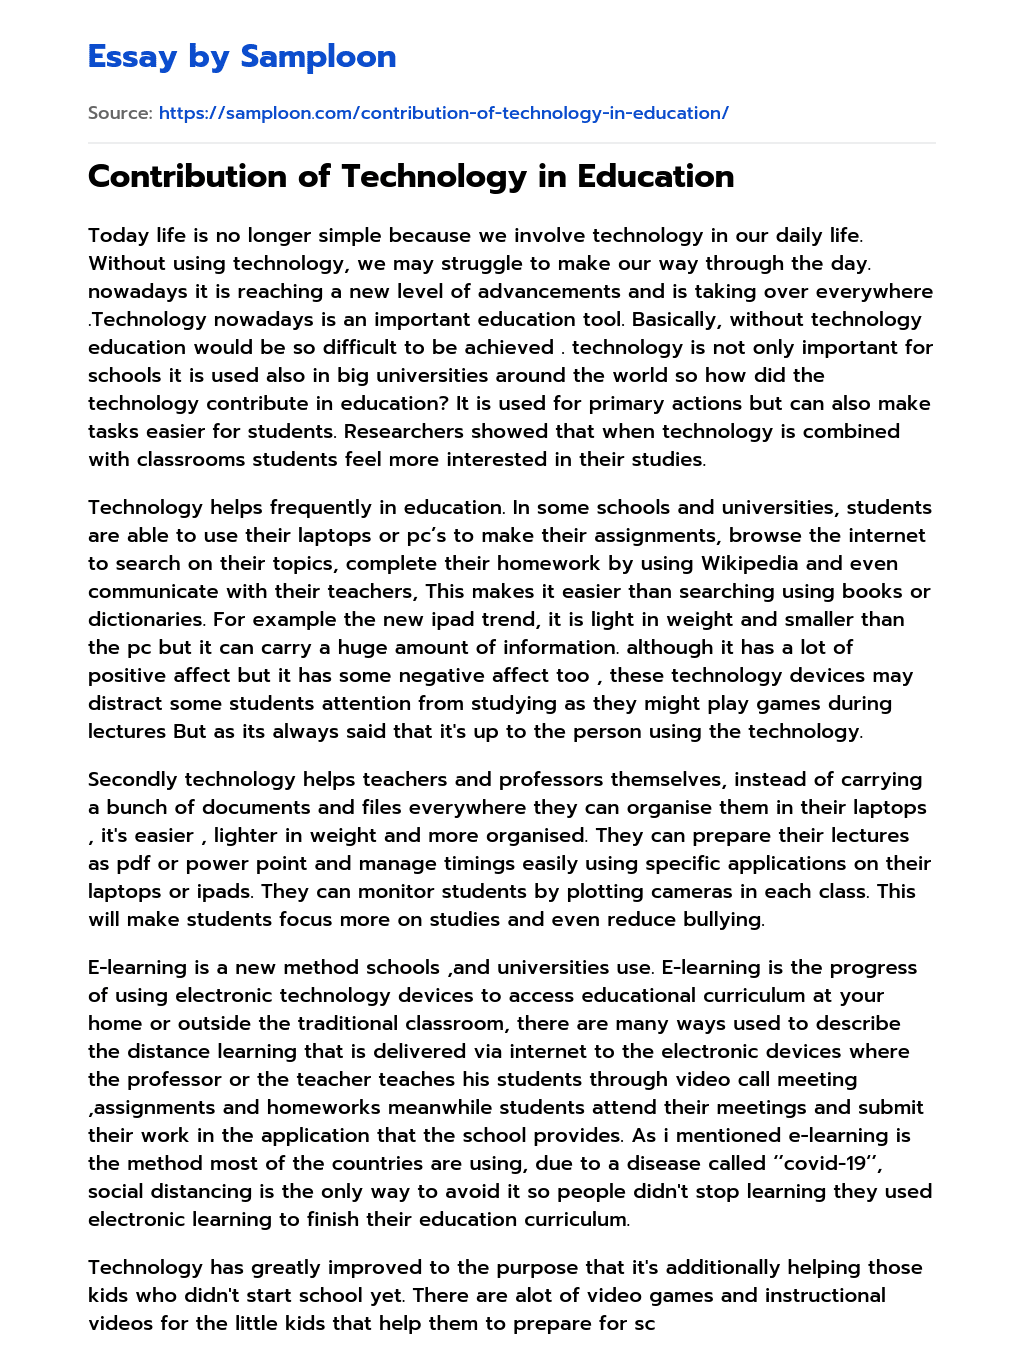 essay on new technologies